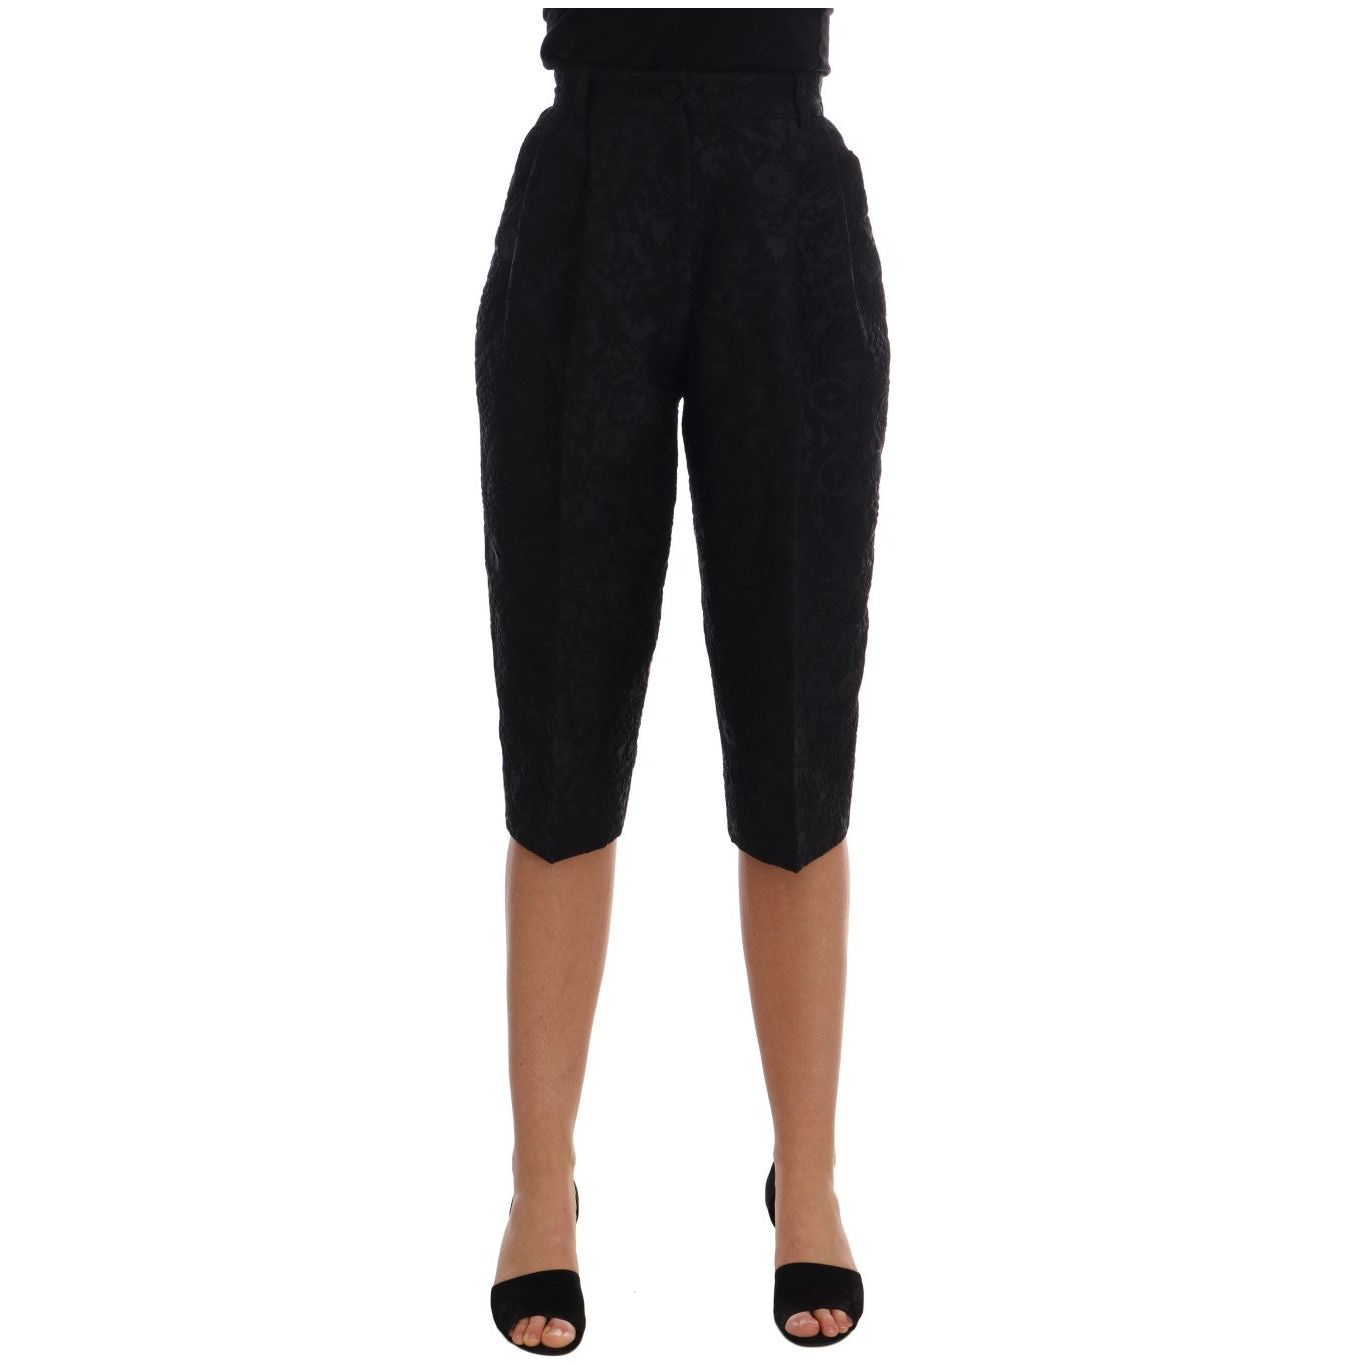 Dolce & Gabbana Elegant Floral Brocade Dress Shorts black-brocade-high-waist-capri-shorts Jeans & Pants 513087-black-brocade-high-waist-capri-shorts.jpg